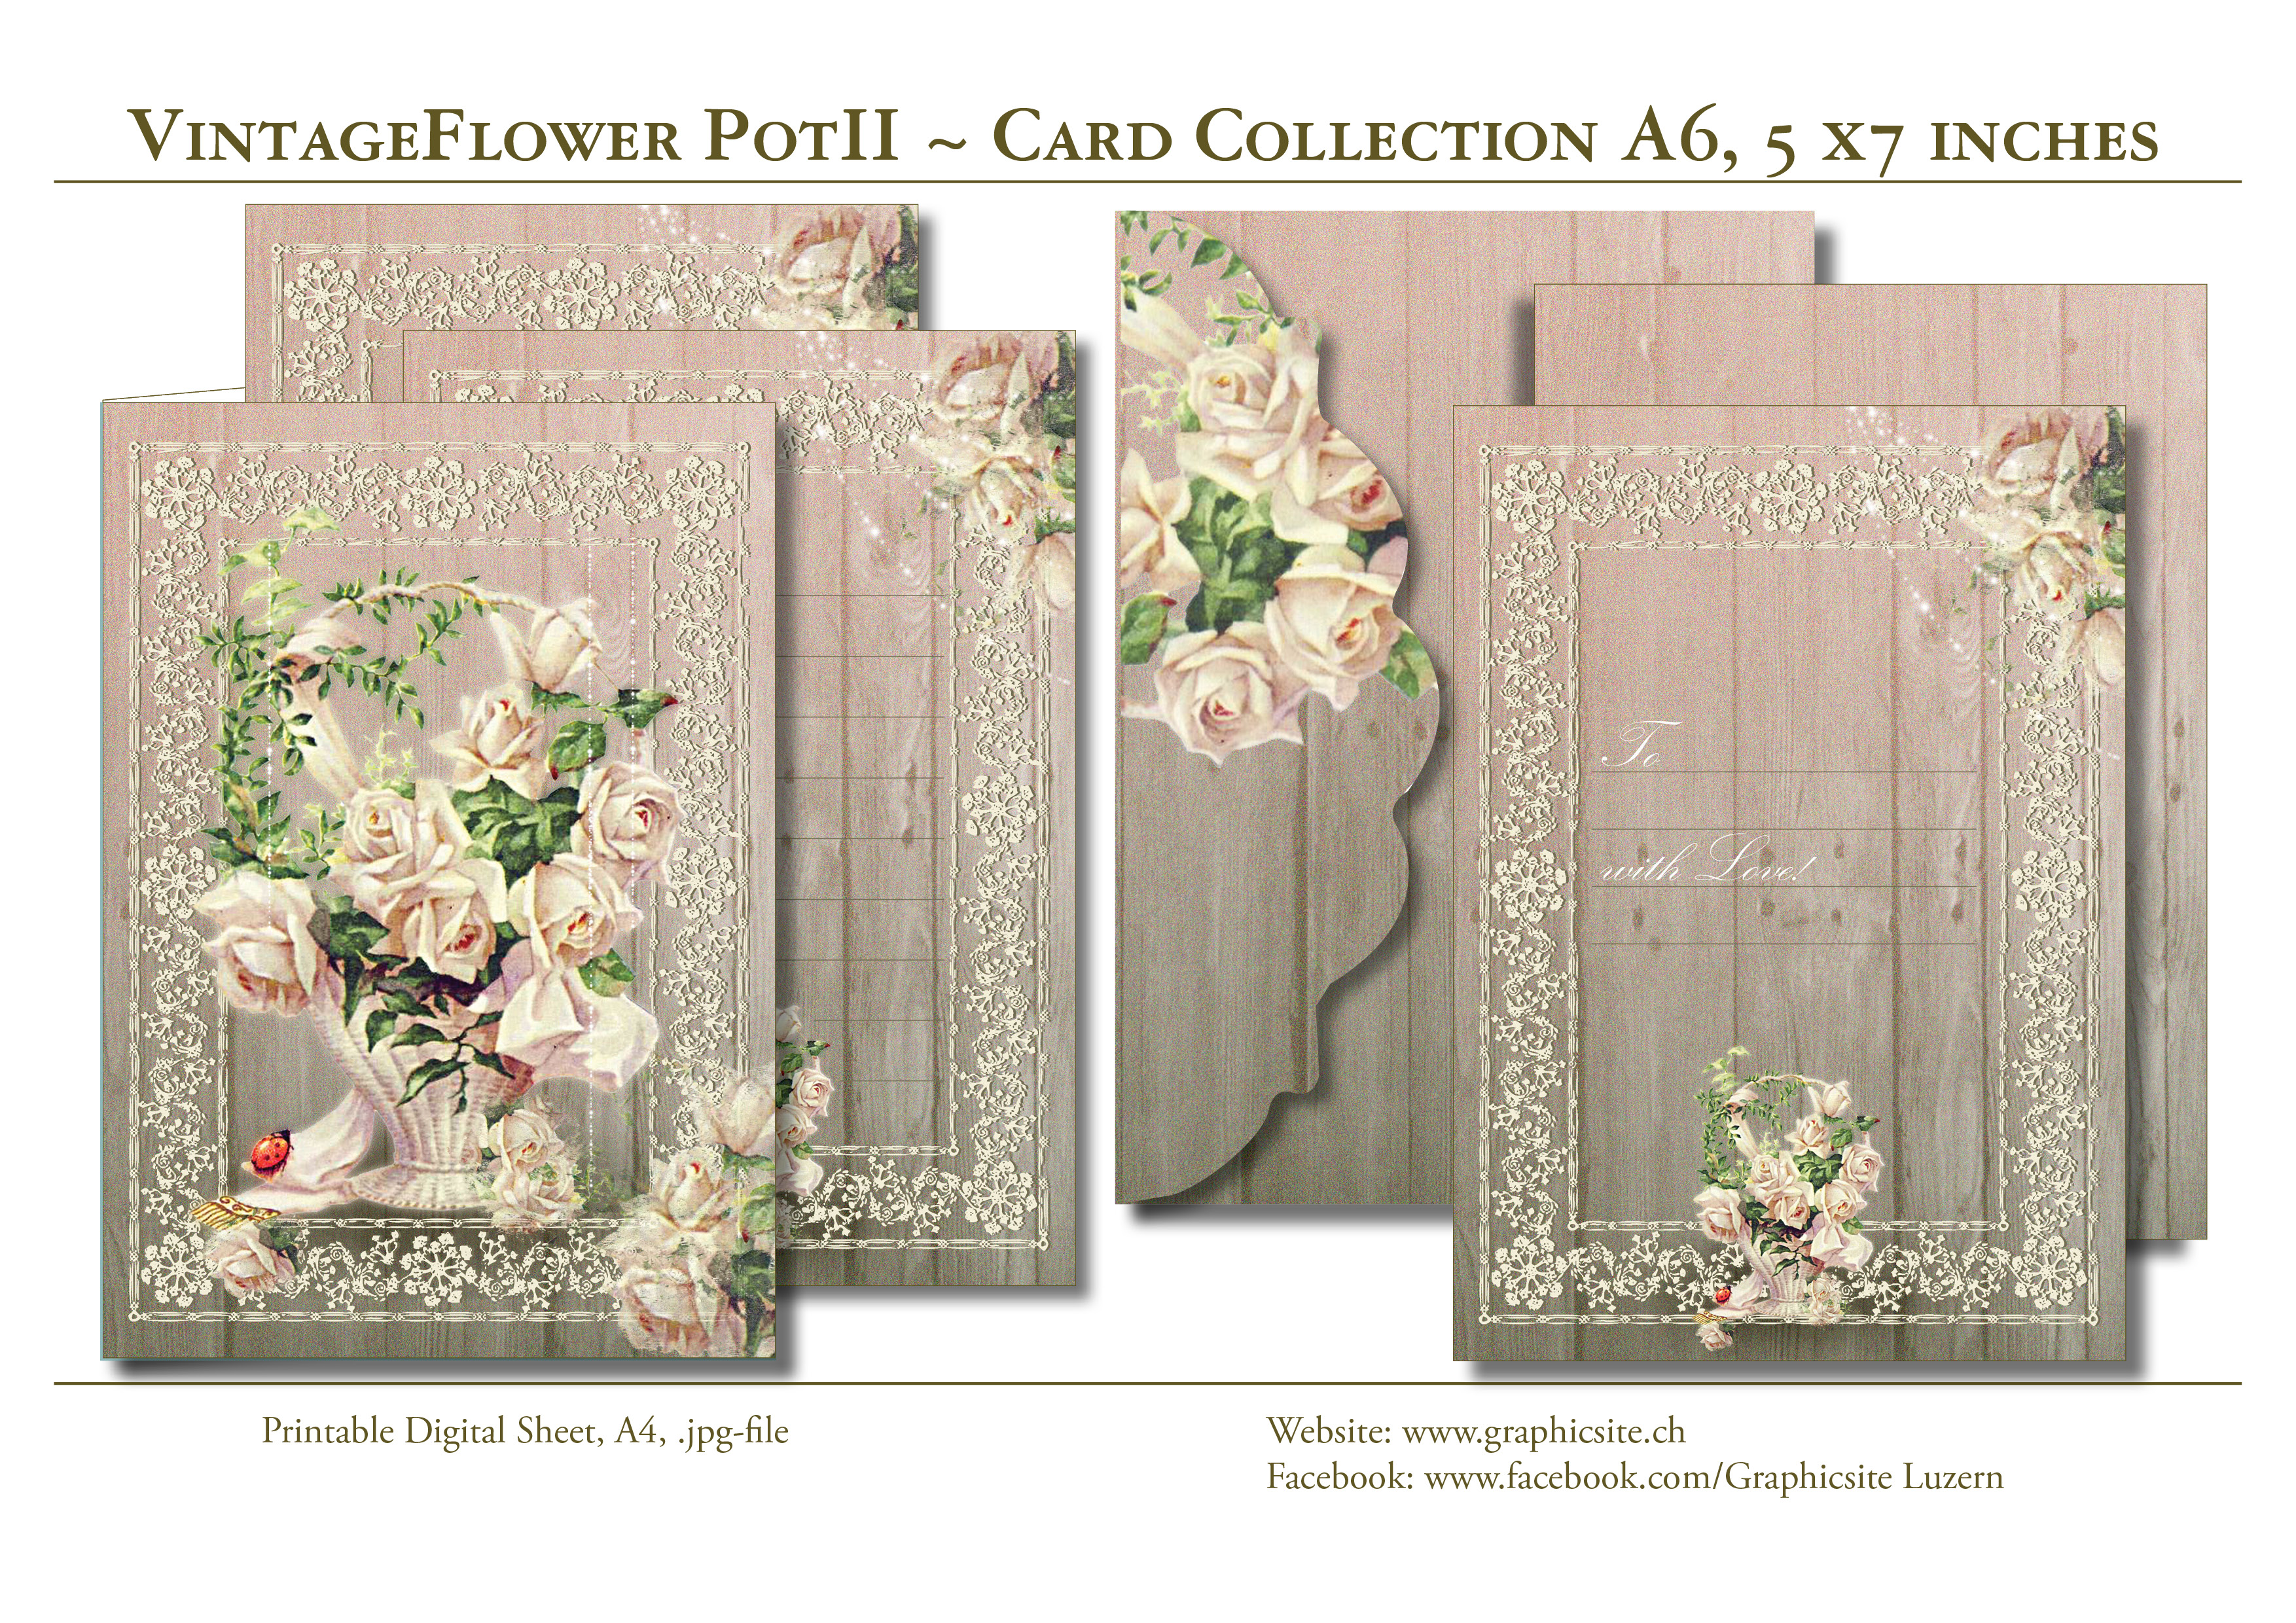 Printable Digital Sheets - Card Collection A6 - VintageFlowerPot2 - Birthday Cards, Envelop, Graphic Design, Luzern